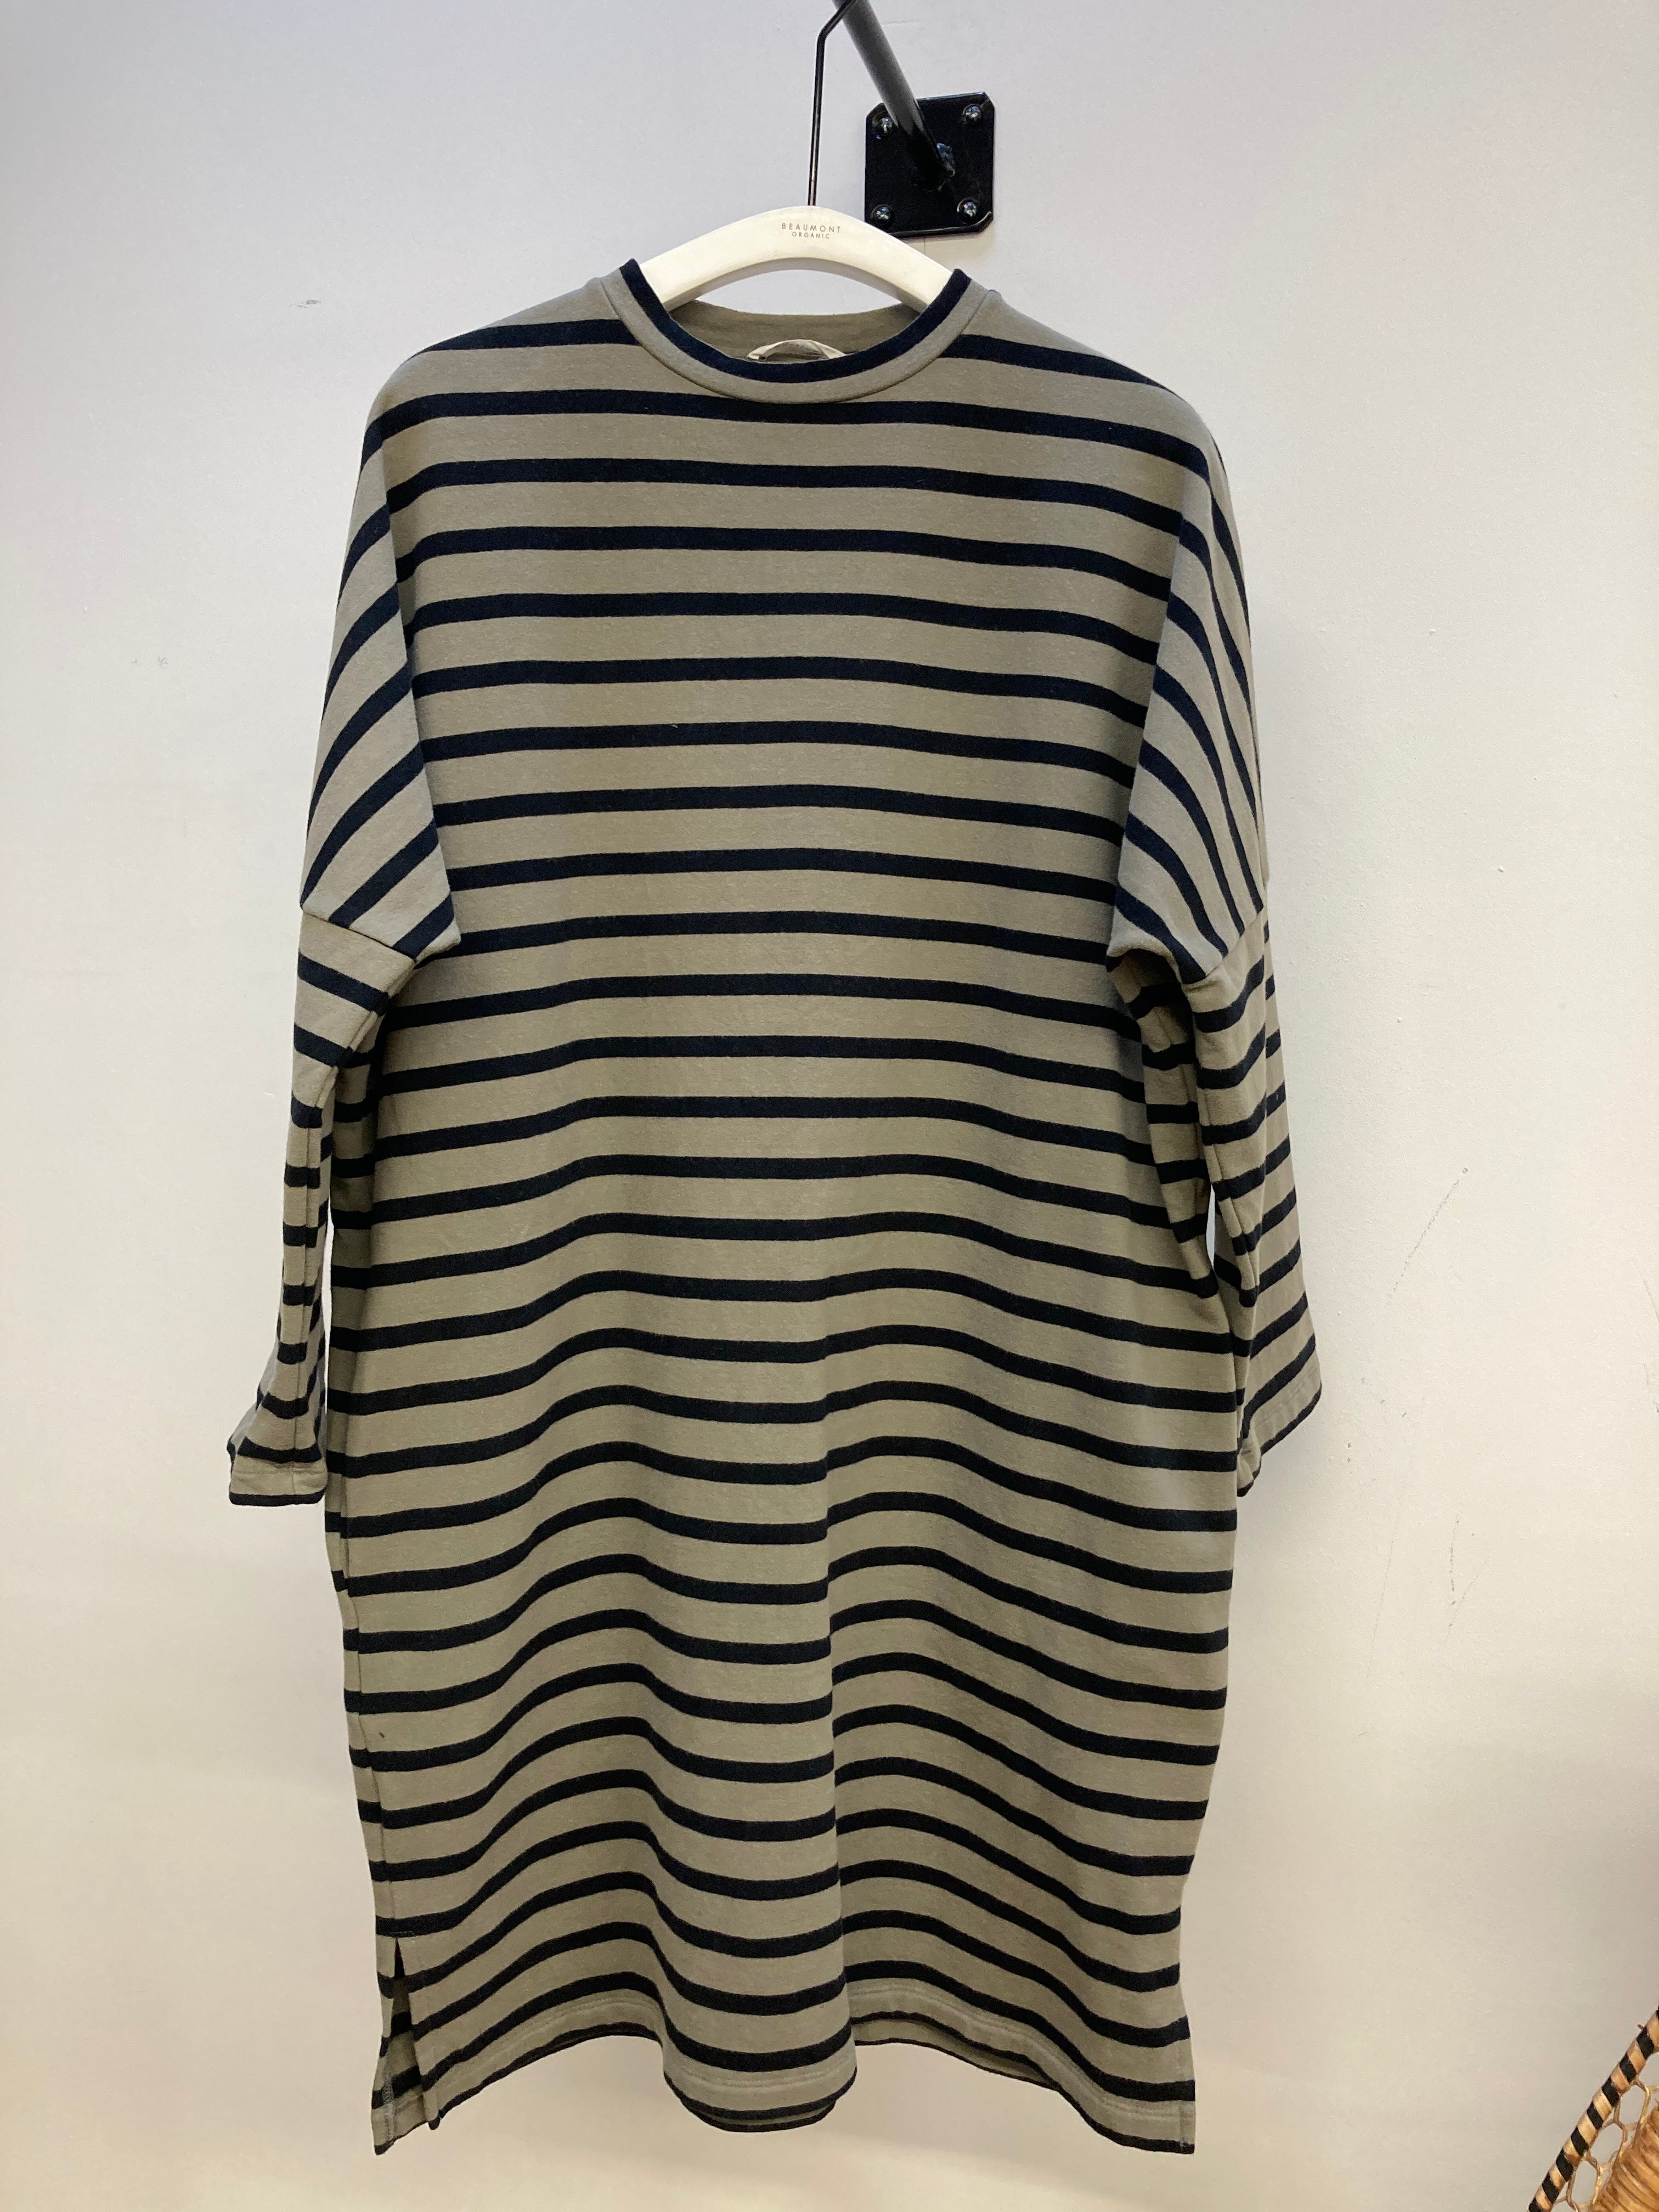 Sarasi-Sue Organic Cotton Dress in Taupe & Black Stripe Size S